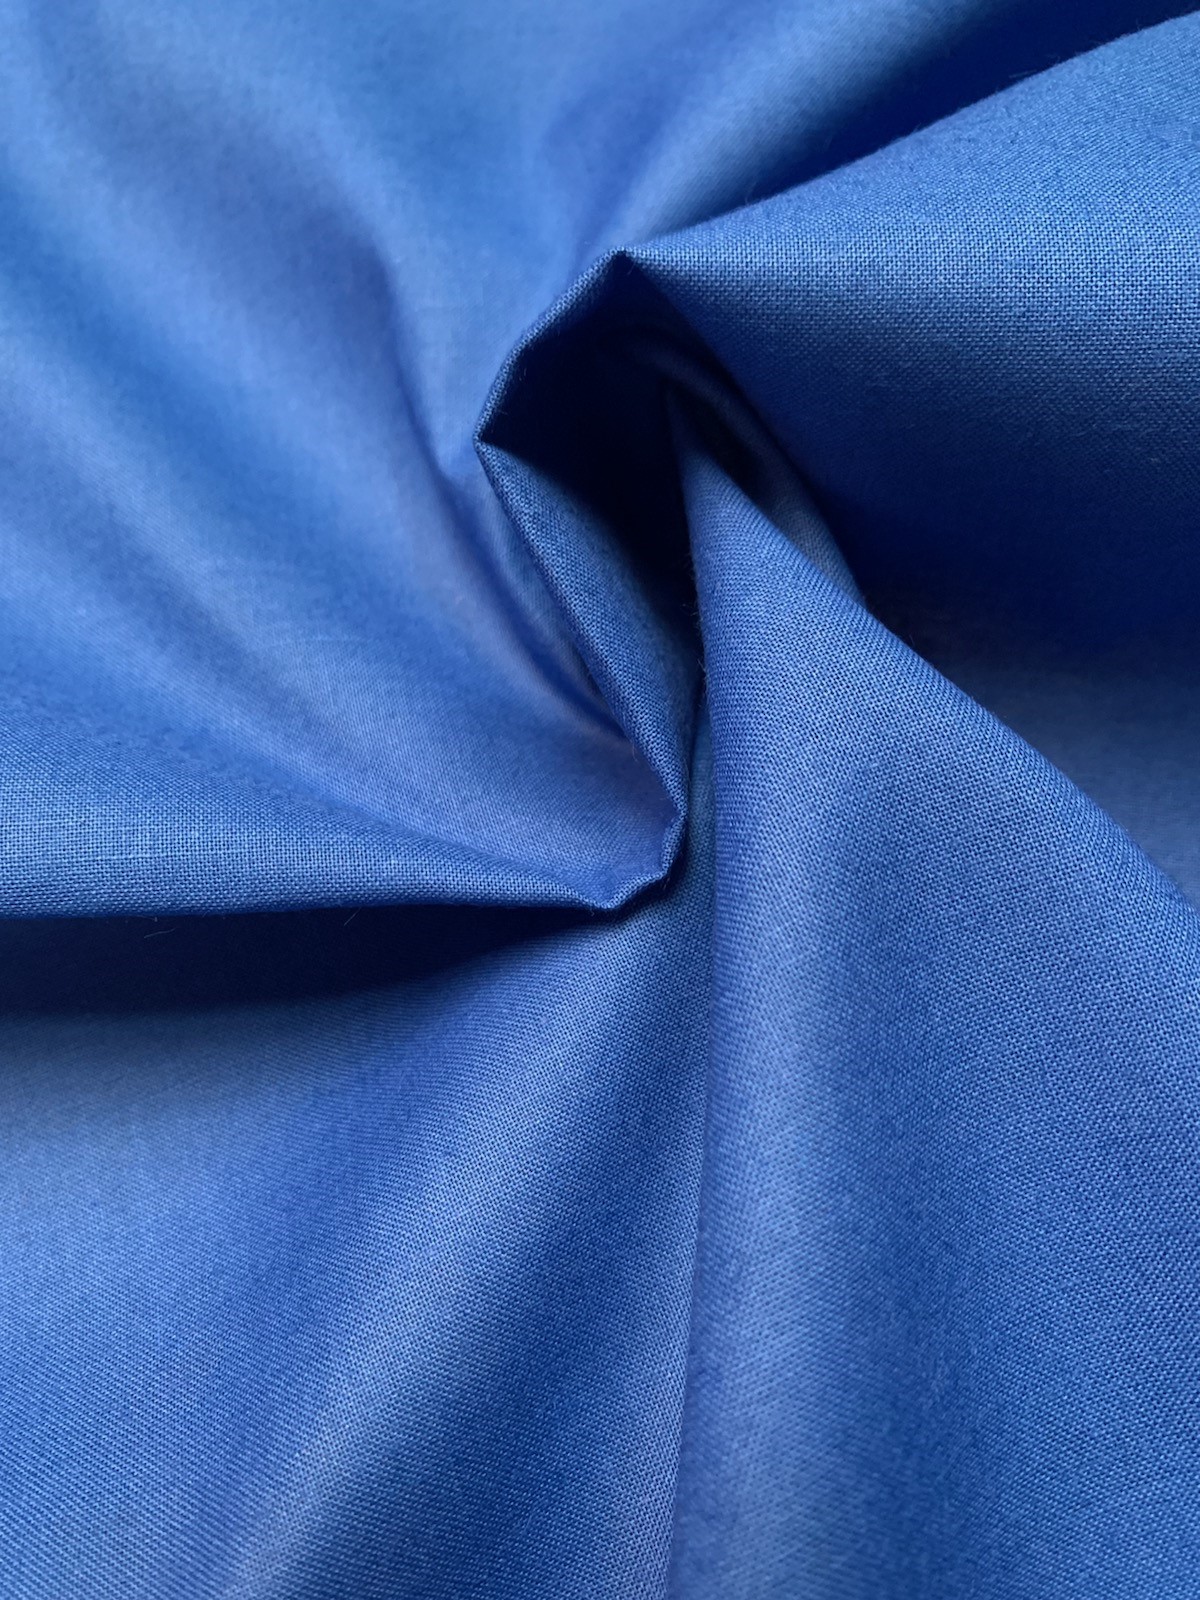 45" Royal Blue Muslin Fabric Per Yard - 100% Cotton